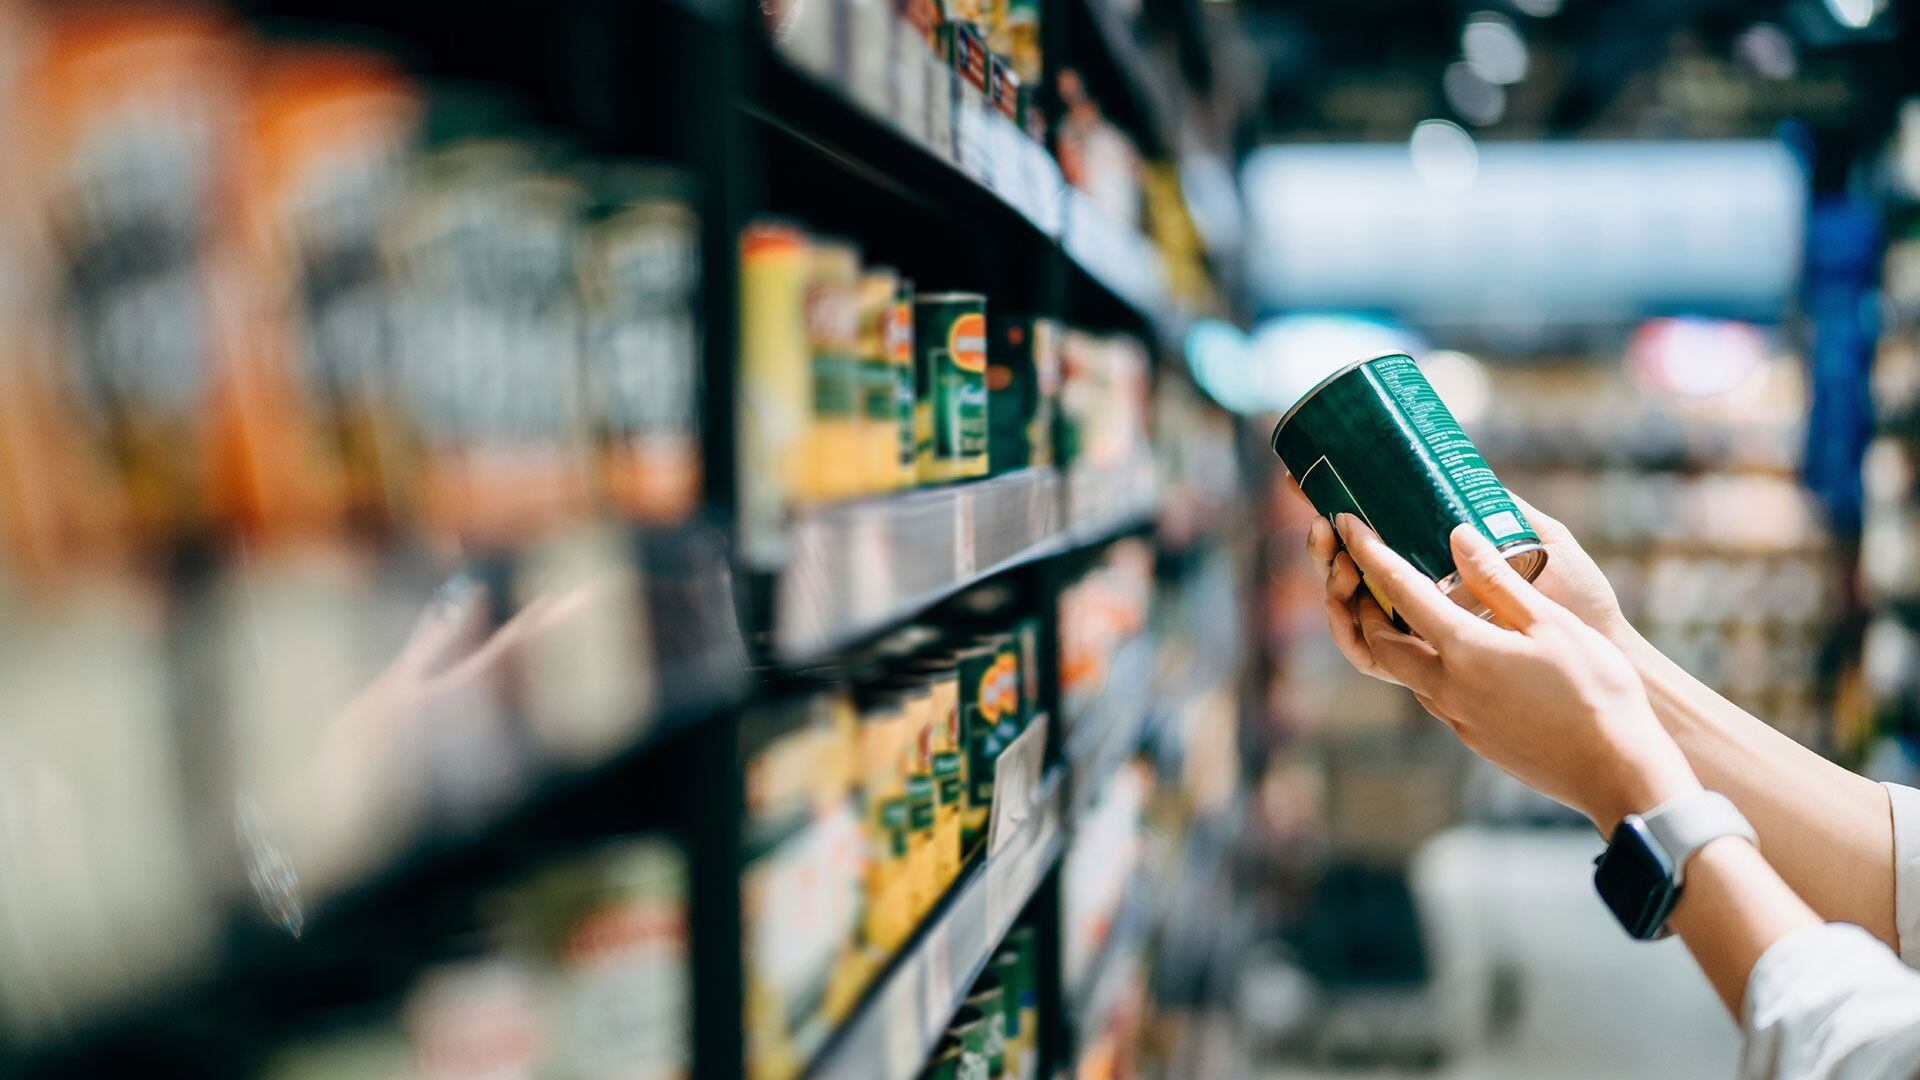 etiquetas-alimentos-supermercado